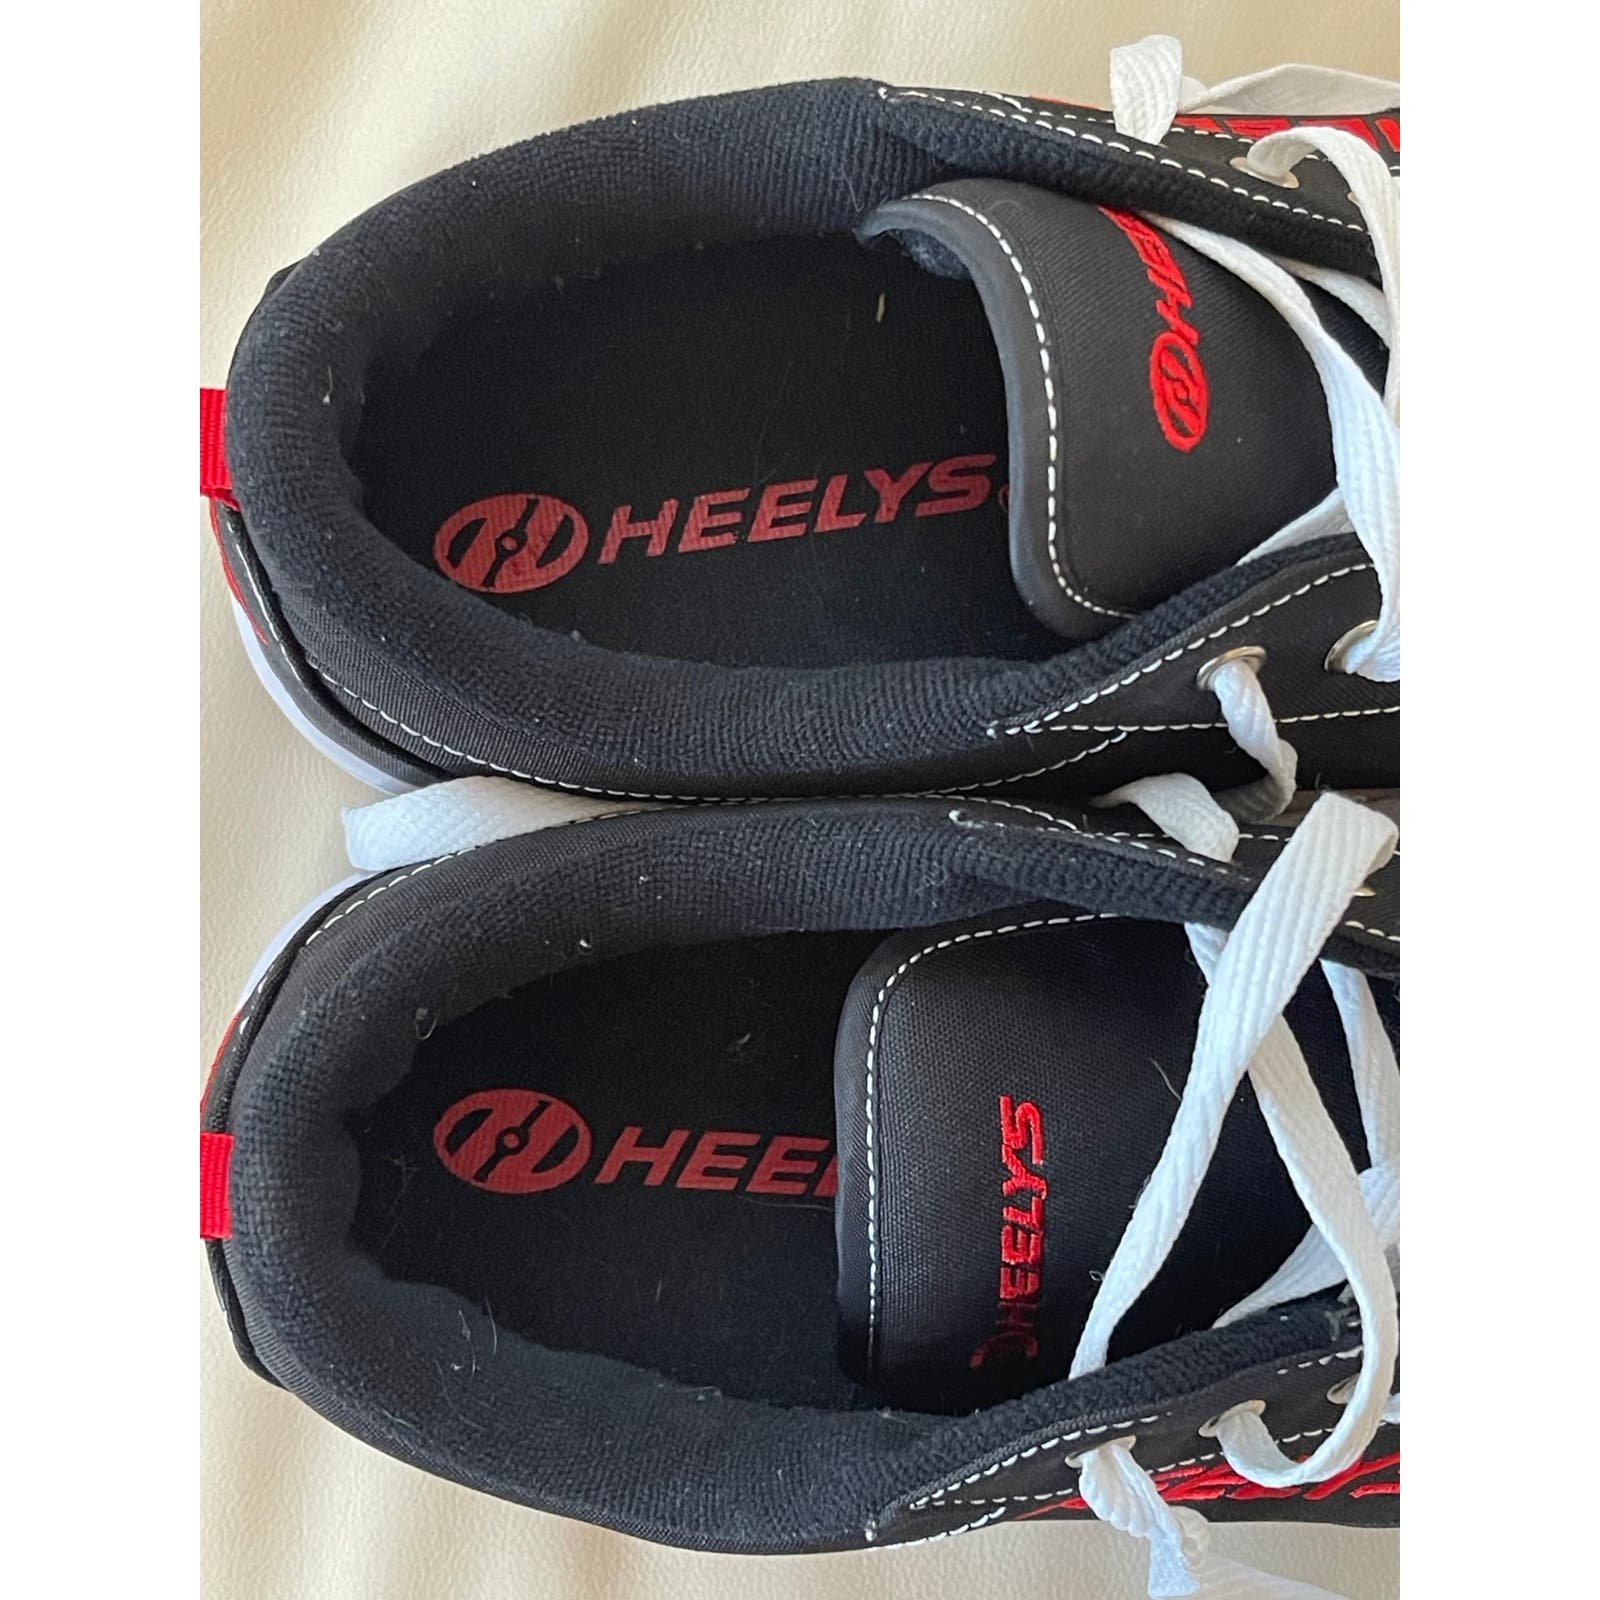 HEELYS Black & Red Pro 20 Wheeled Heel Shoe Adult Men Size 12 bYhGFfeZe